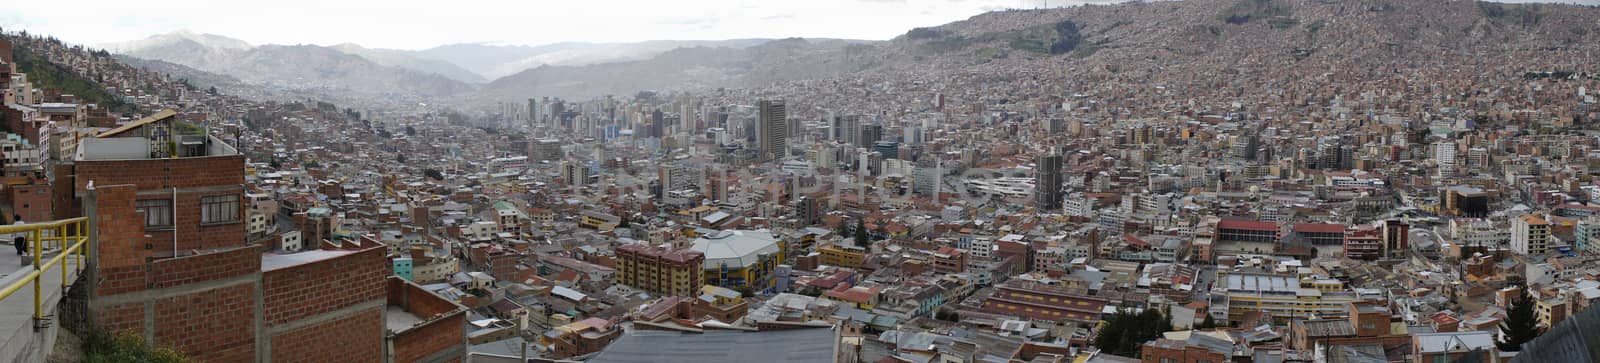 La Paz, Bolivia, South America by giannakisphoto